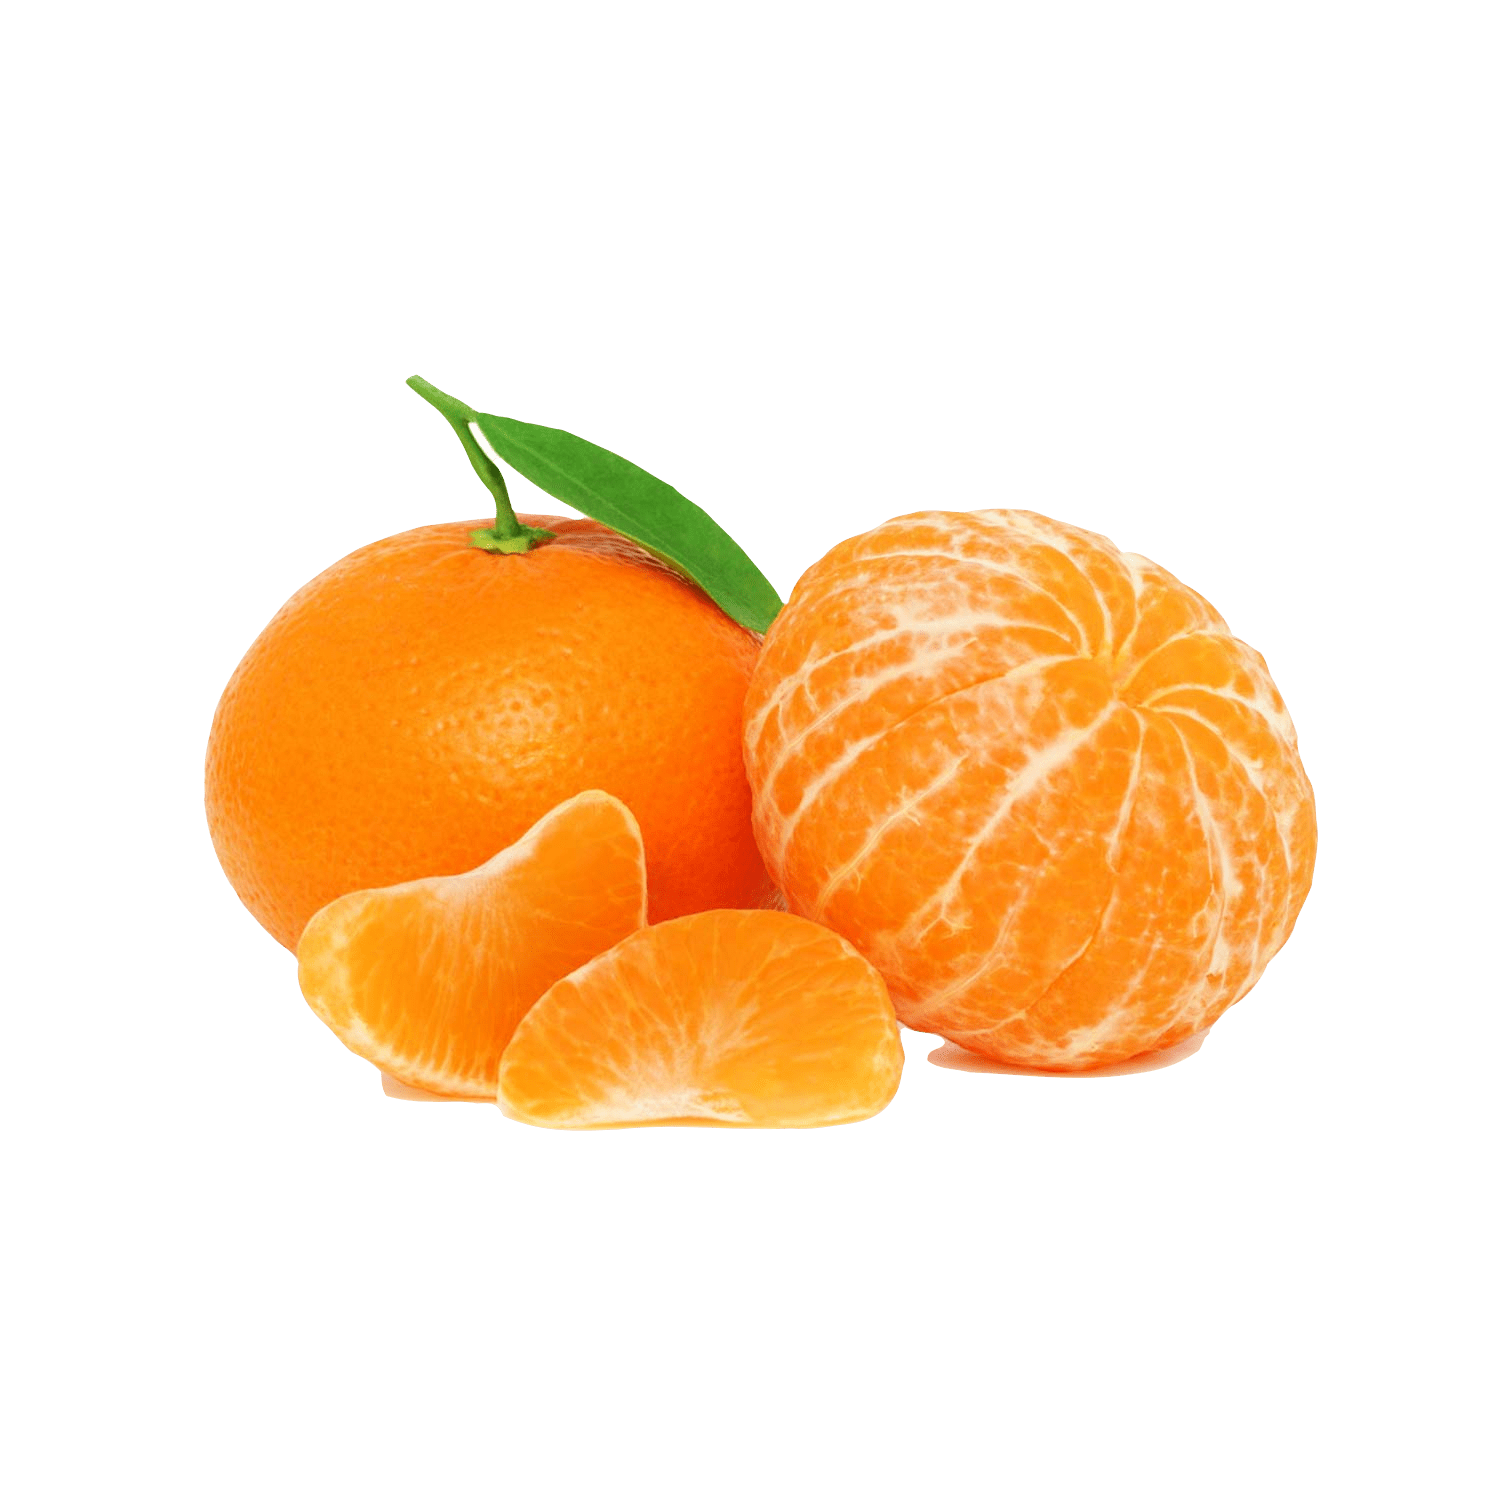 Tangerine 1